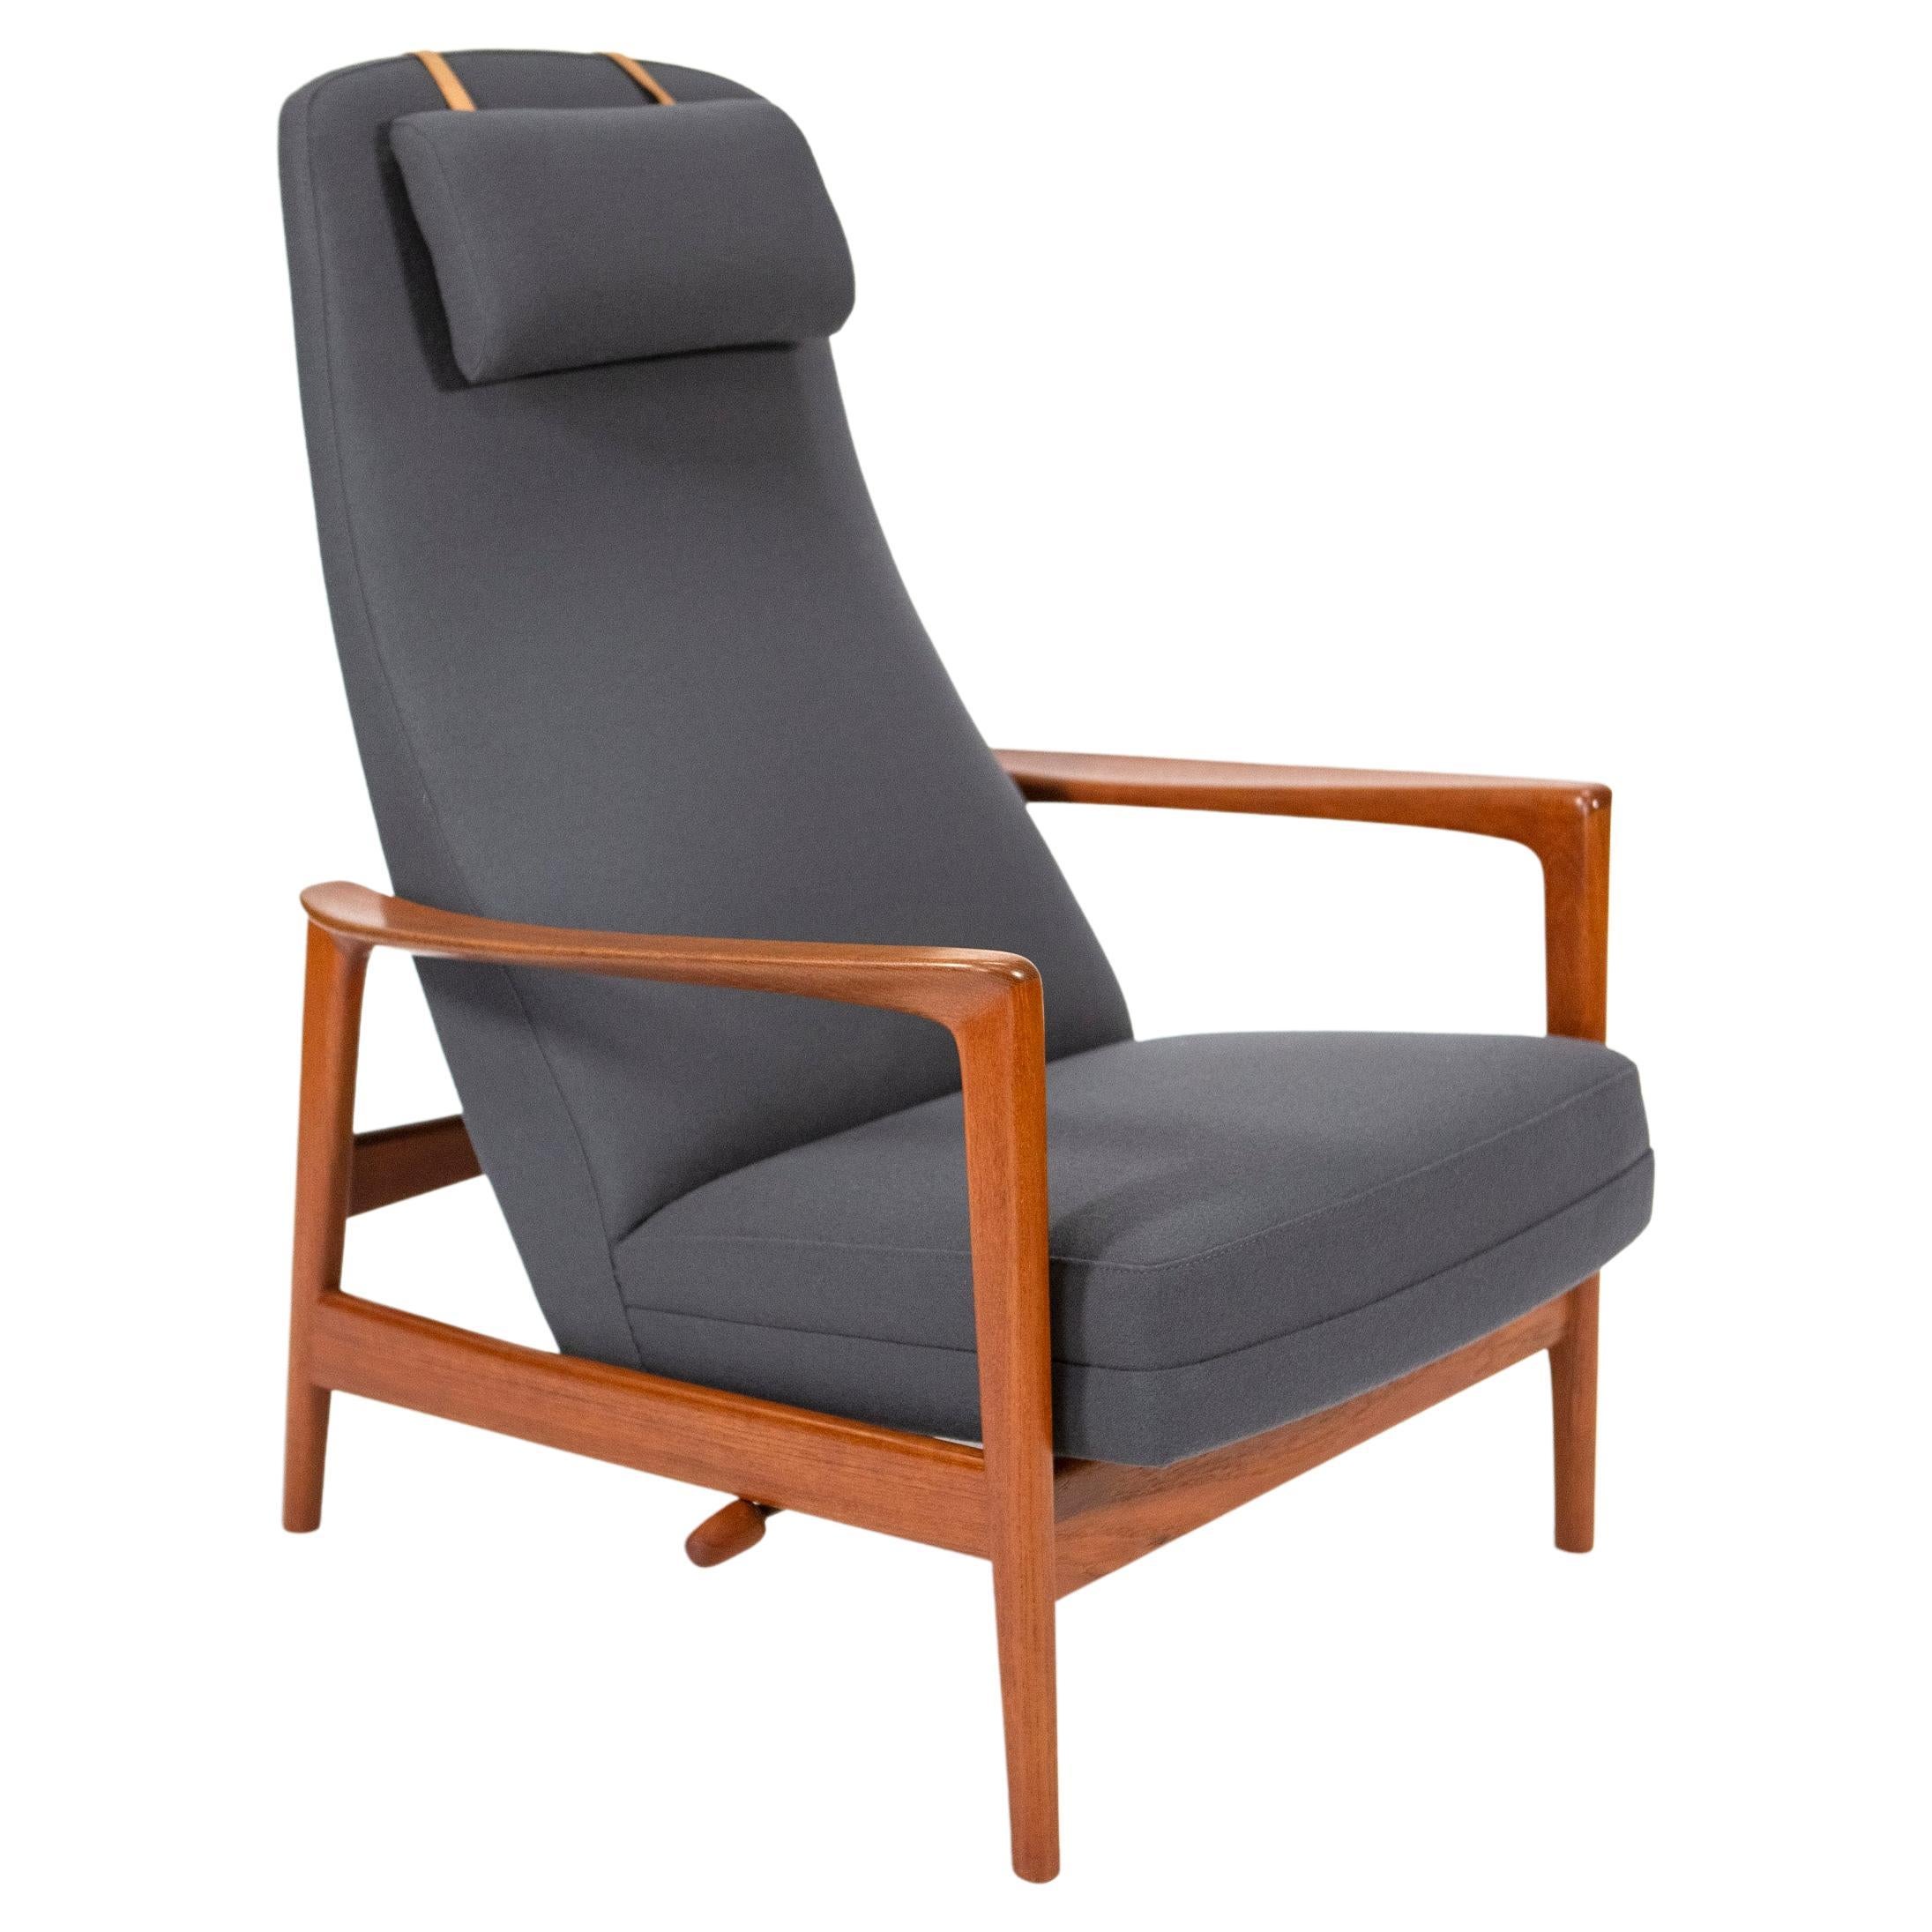 Folke Ohlsson teak 'Duxiesta' Adjustable Arm Chair by DUX - Sweden 1960's For Sale